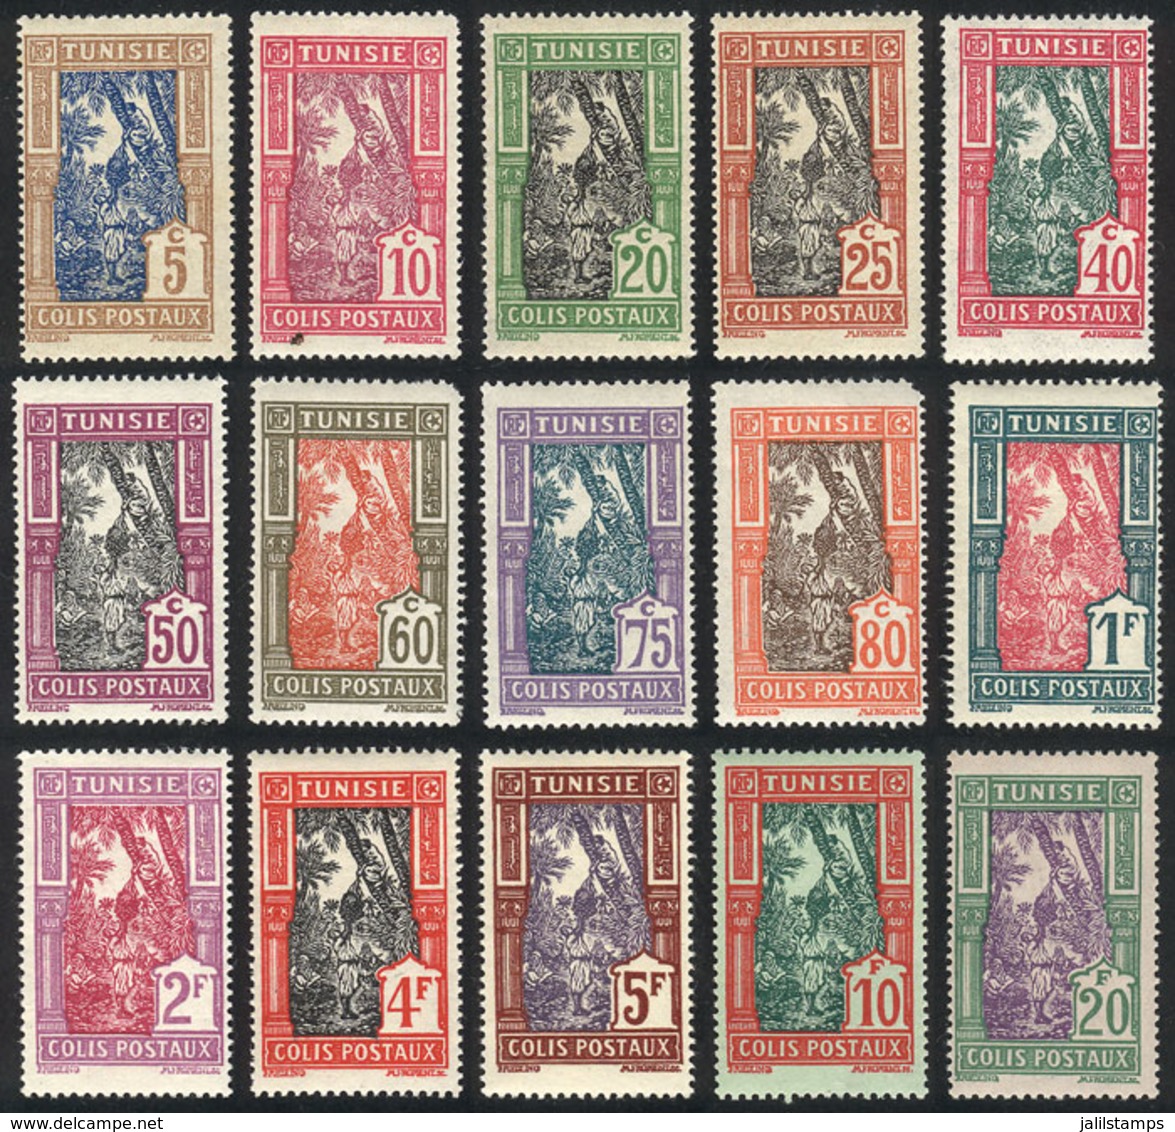 TUNISIA: Yvert 11/25, 1926 Dates, Cmpl. Set Of 15 Mint Values, Very Fine Quality! - Tunisia